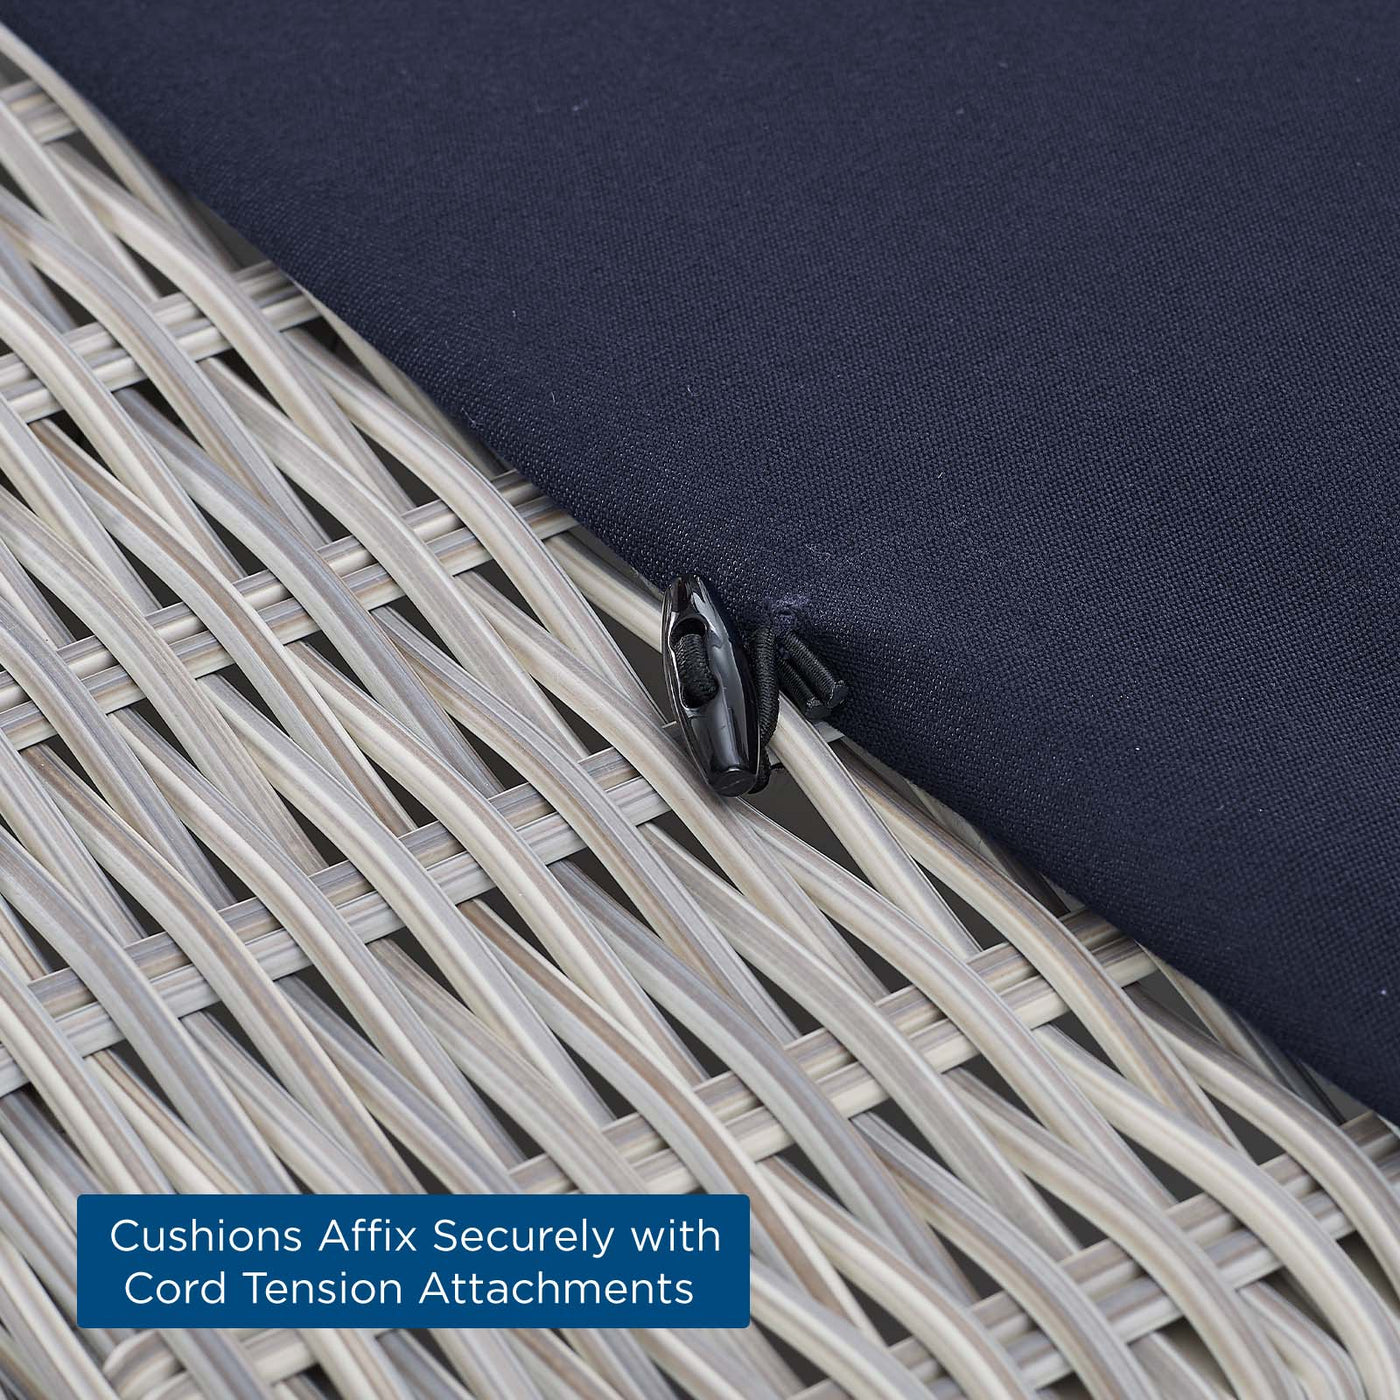 Conway Sunbrella® Outdoor Patio Wicker Rattan Right-Arm Chair